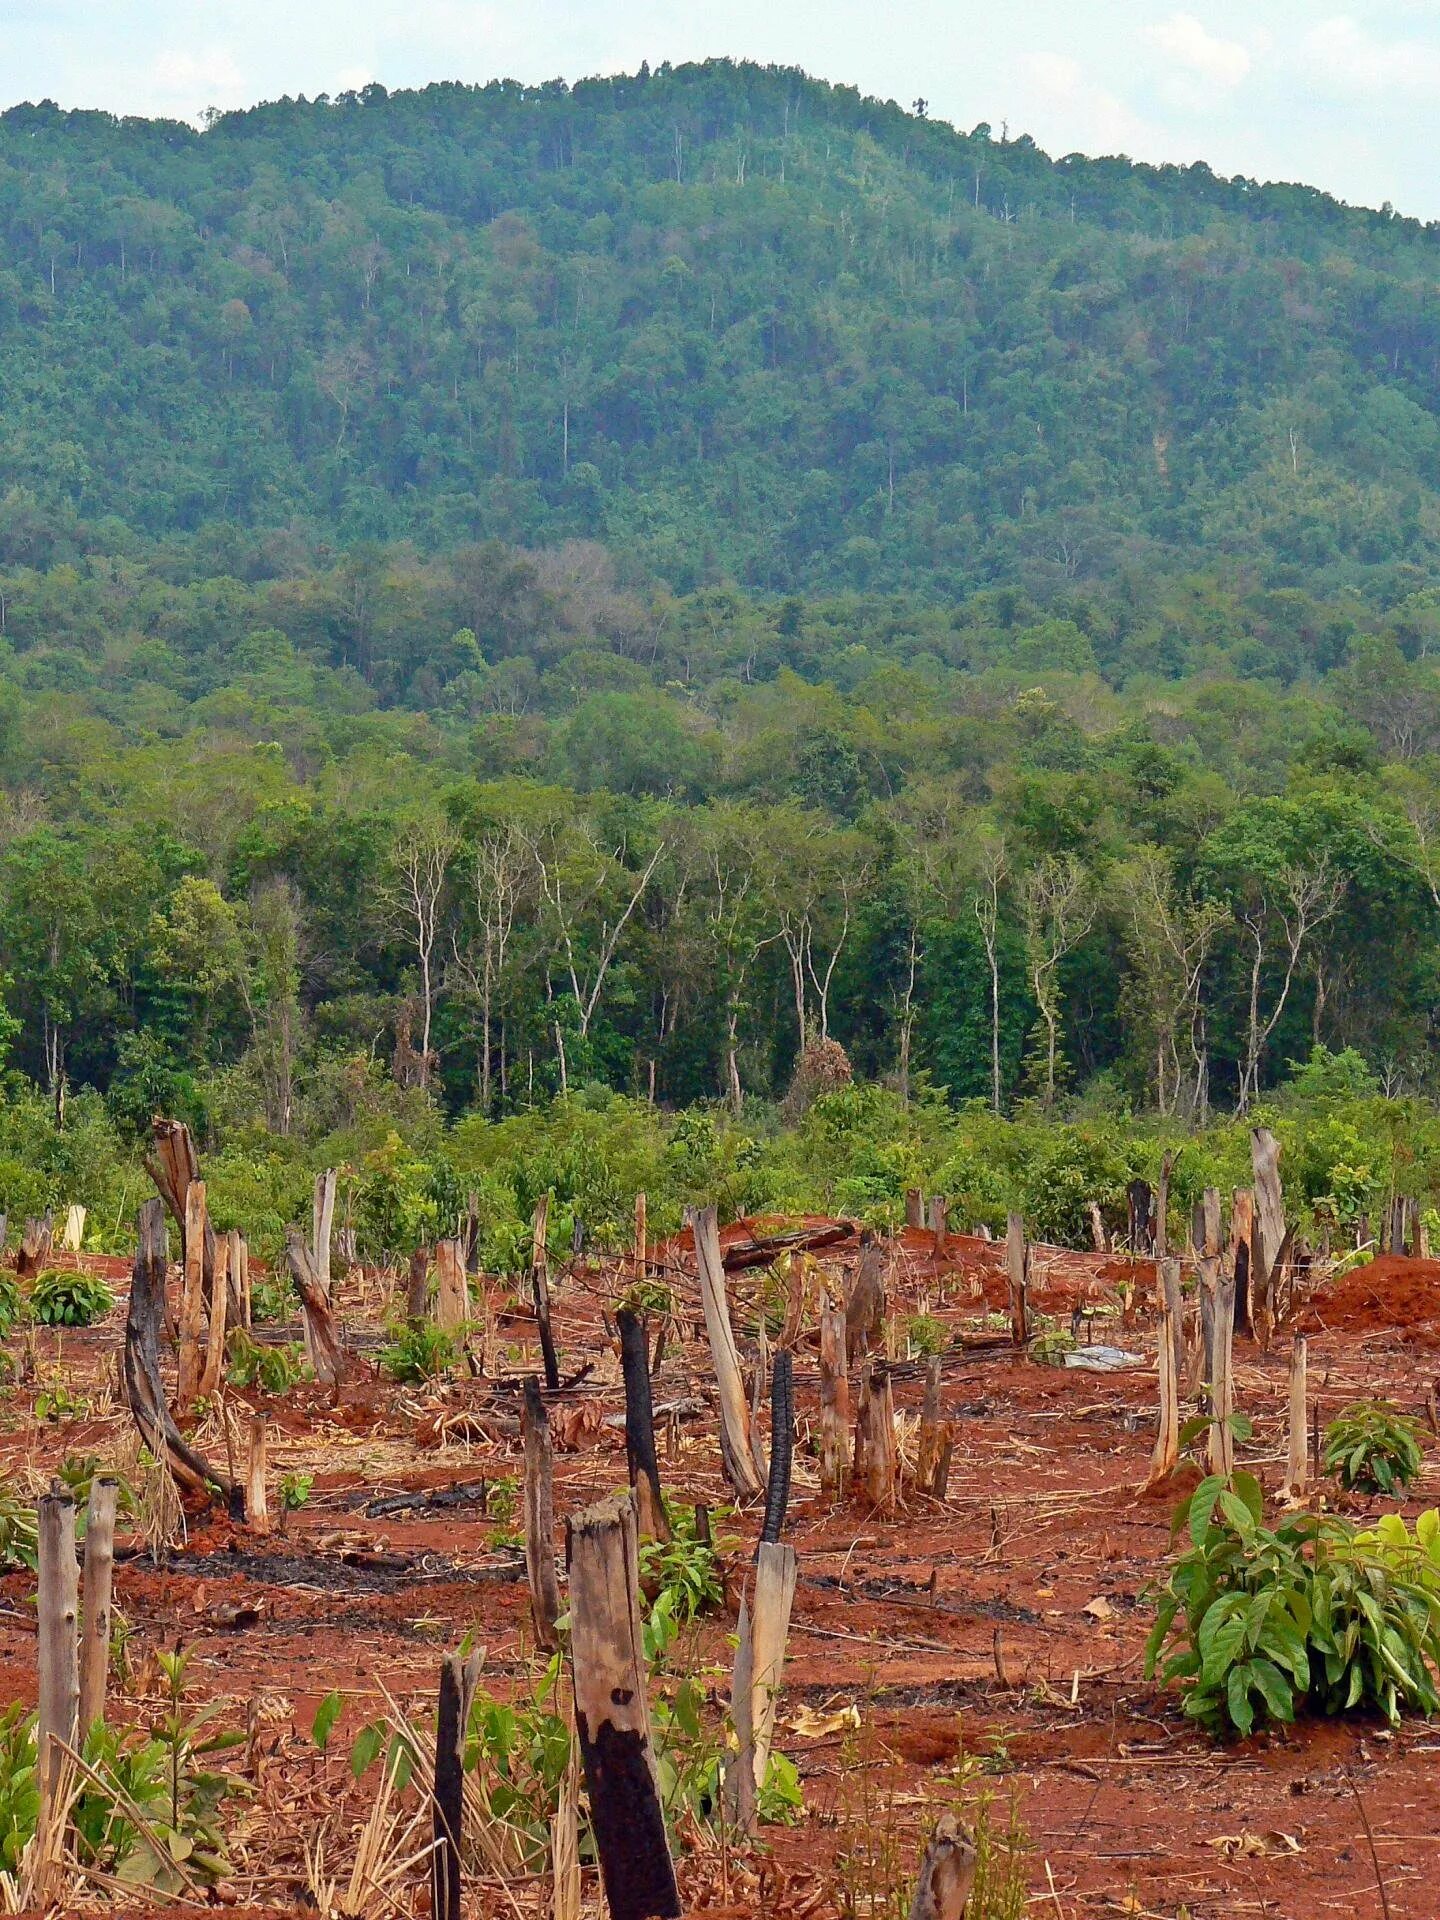 Проблема тропического леса